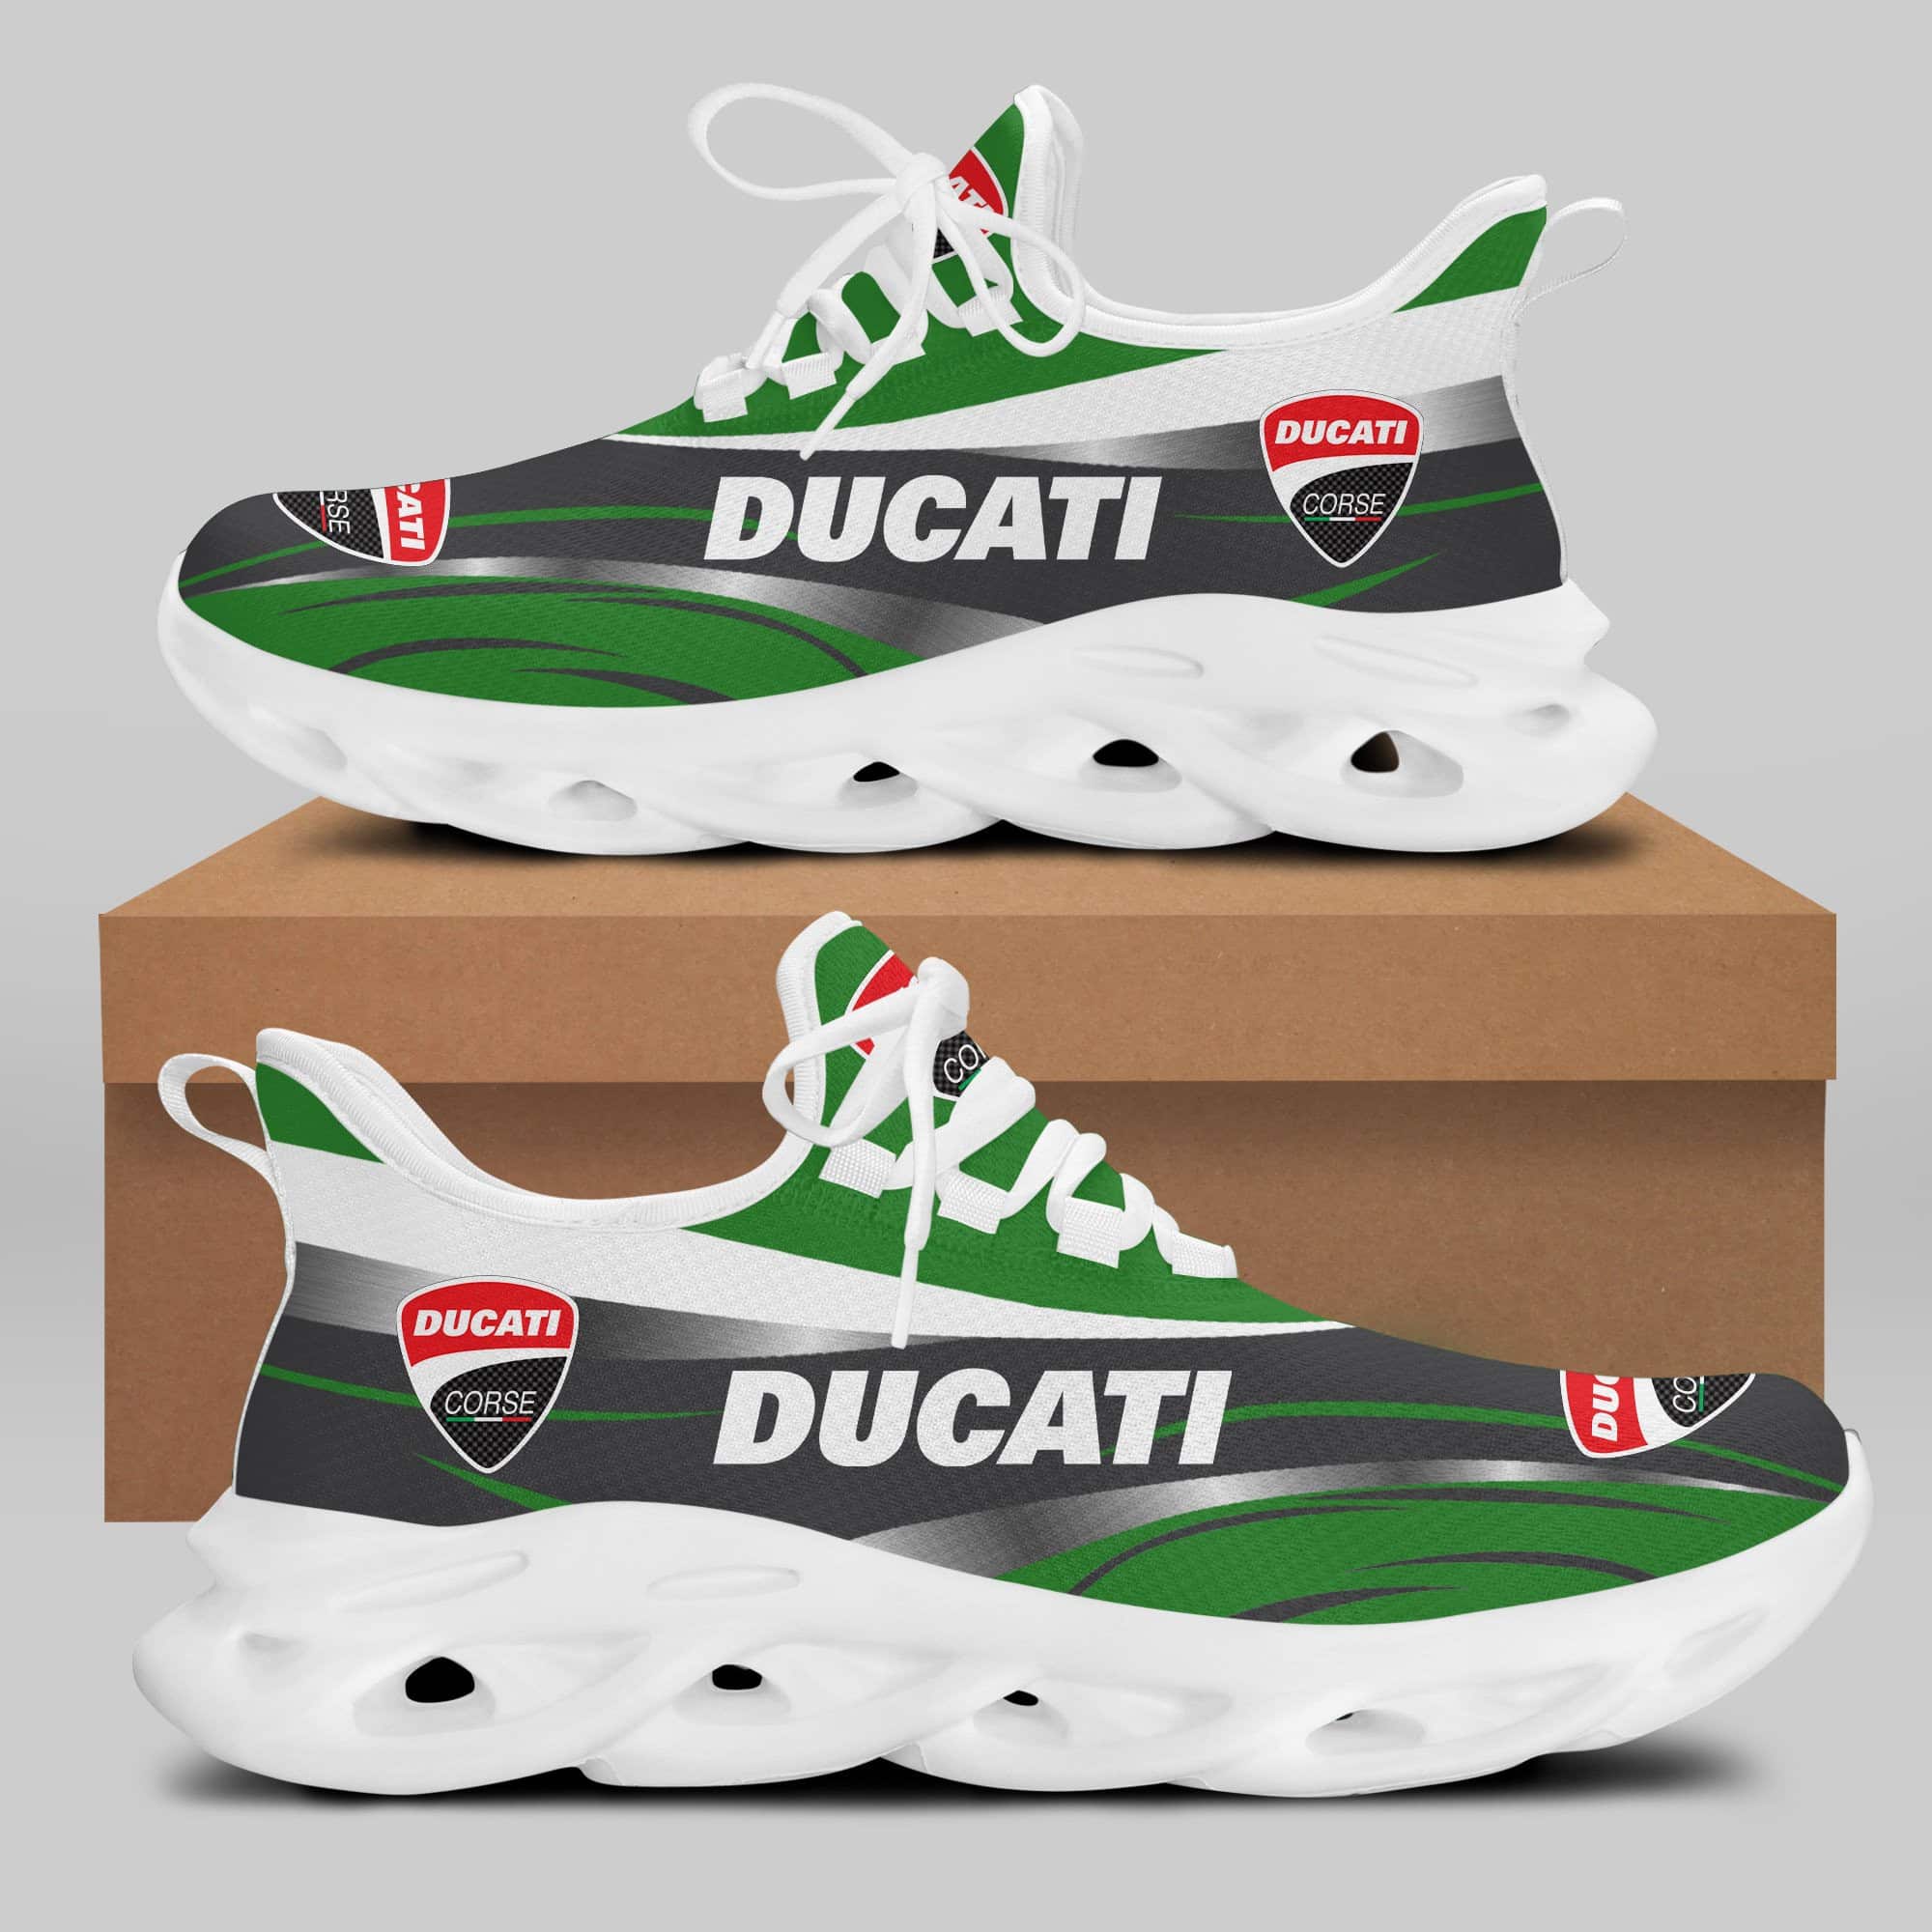 Ducati Racing Running Shoes Max Soul Shoes Sneakers Ver 54 1